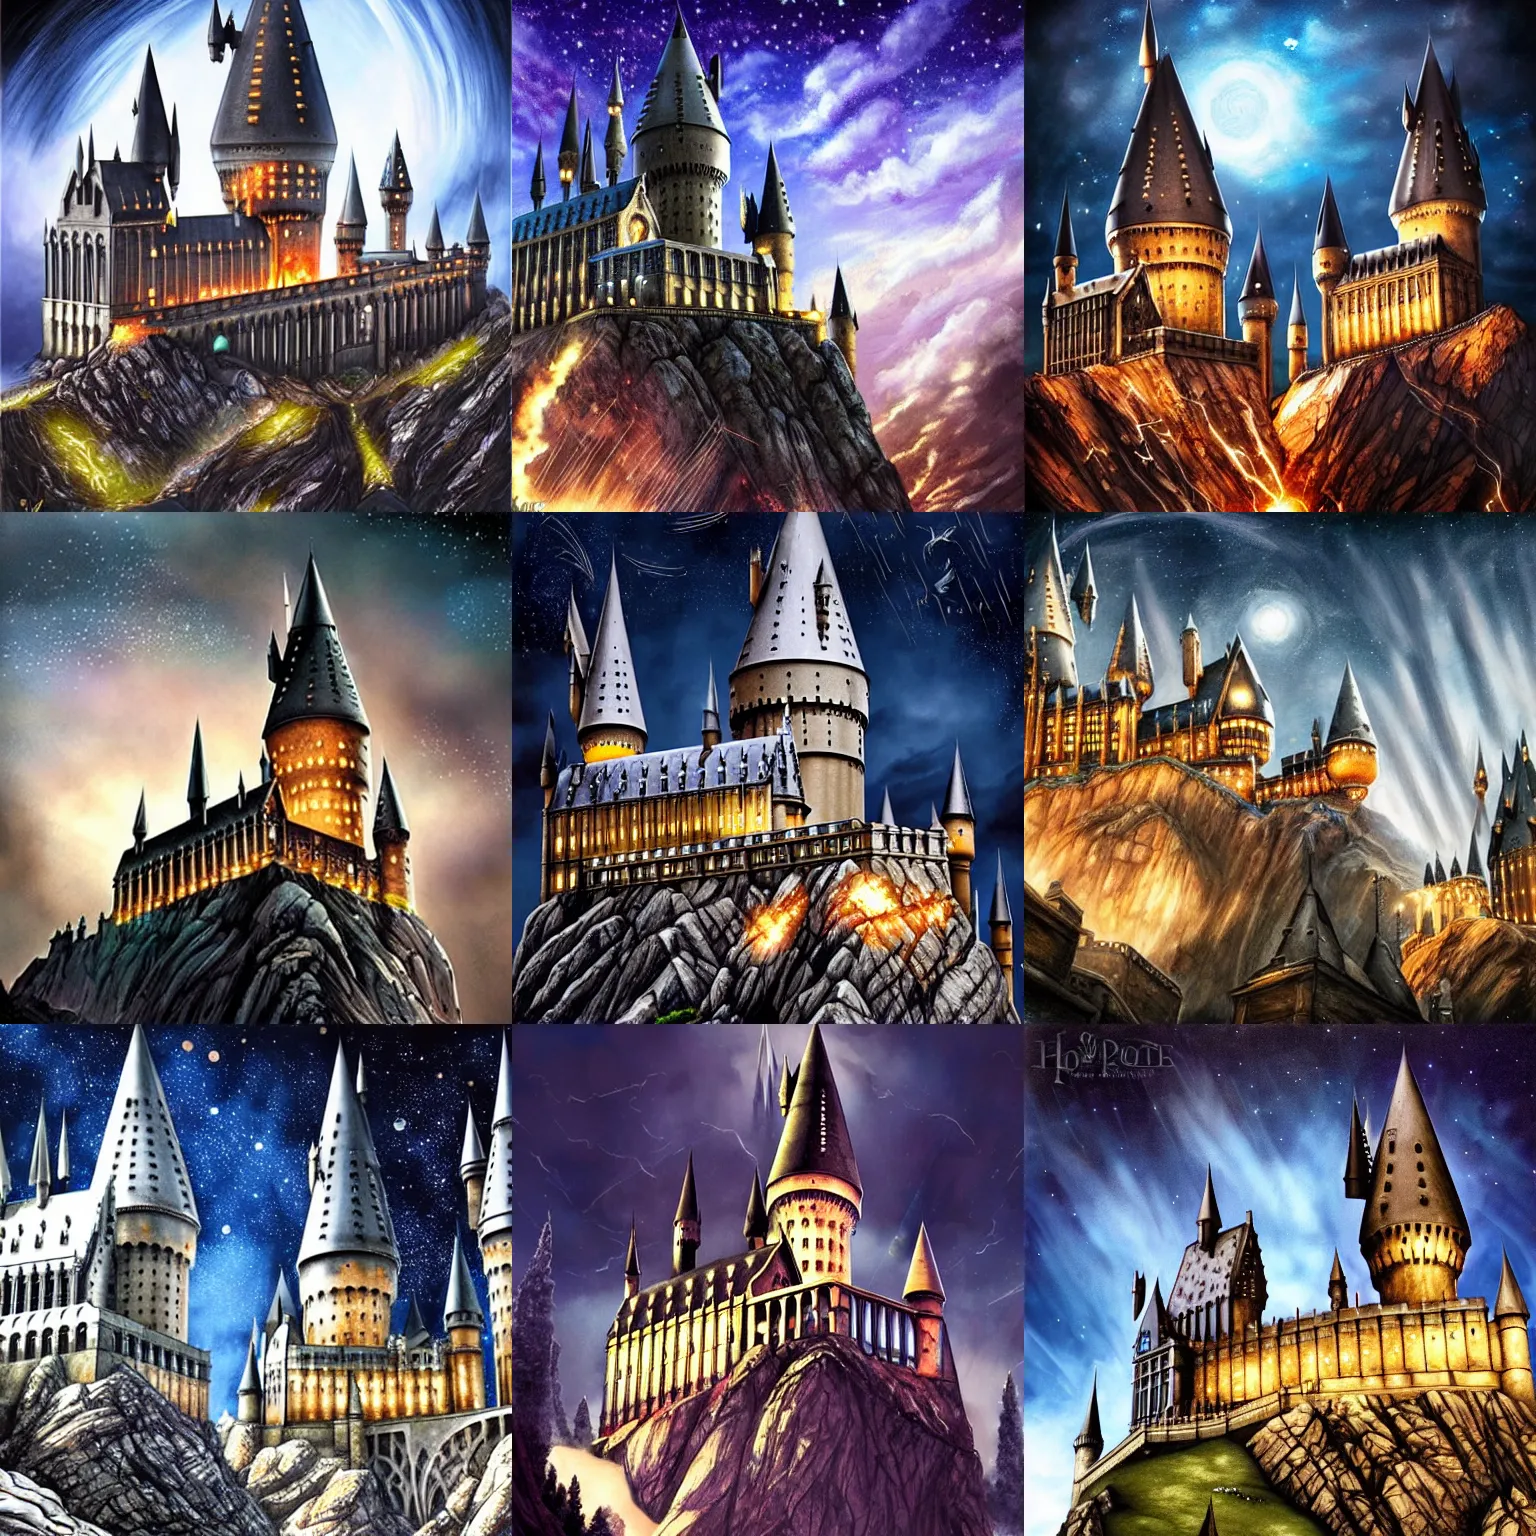 Prompt: harry potter hogwarts castle. beautiful, majestic, sky like starry night. wide angle shot. artgerm style, concept art